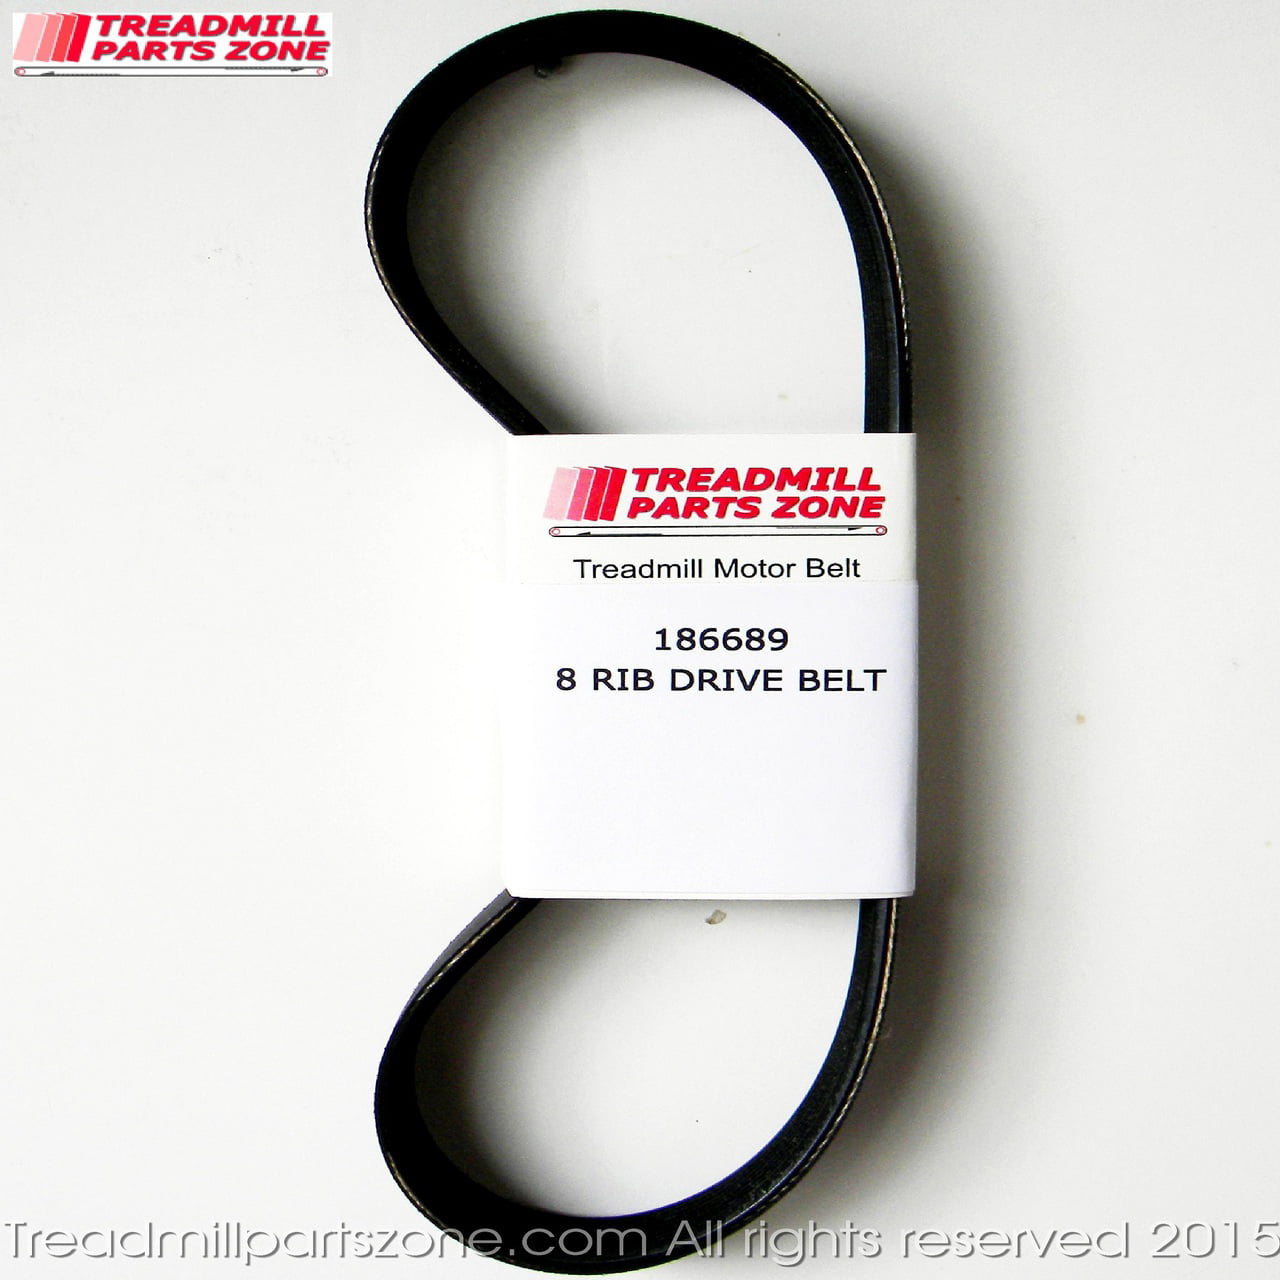 Treadmill Doctor Drive Belt for Proform GXL760/795Sl/770EKG Tread Model Number PFTL69211